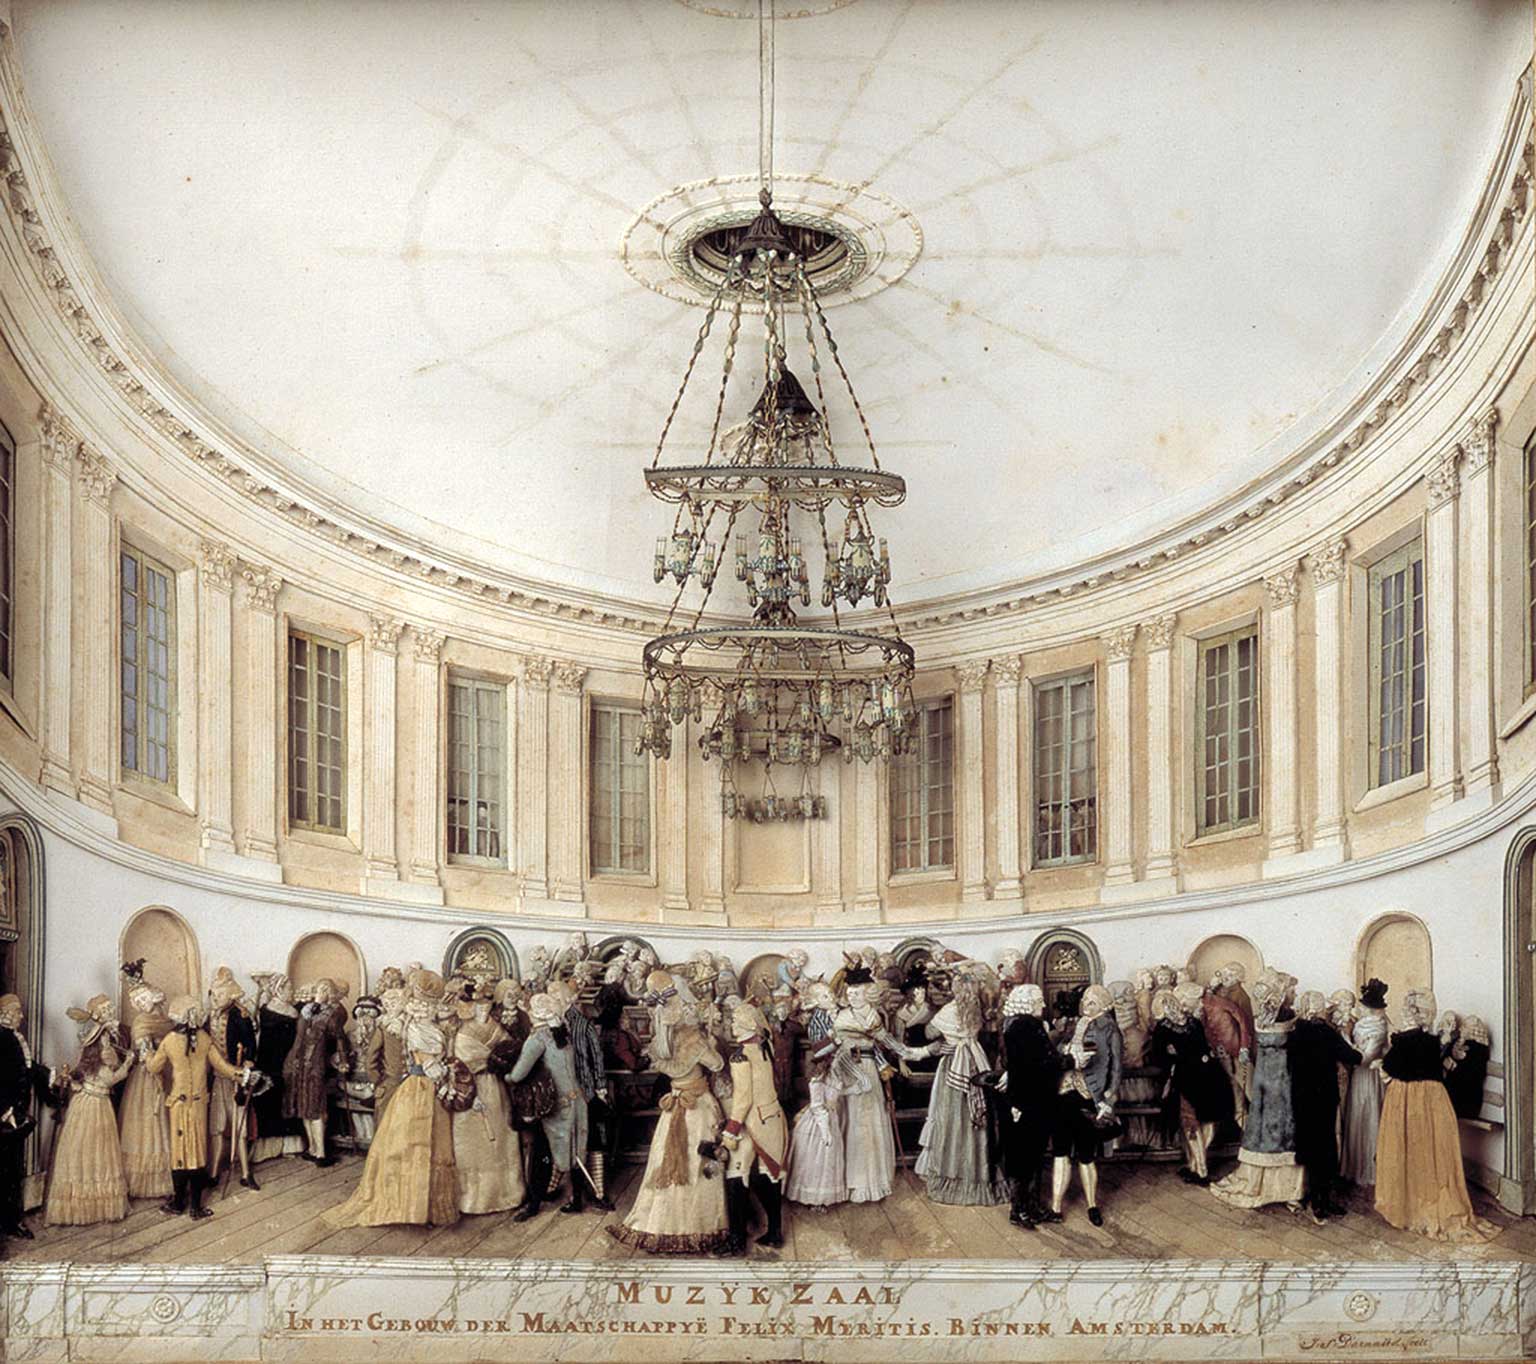 Bavelaar Music Hall in Felix Meritis, Amsterdam, paper cut-out from 1781-1801